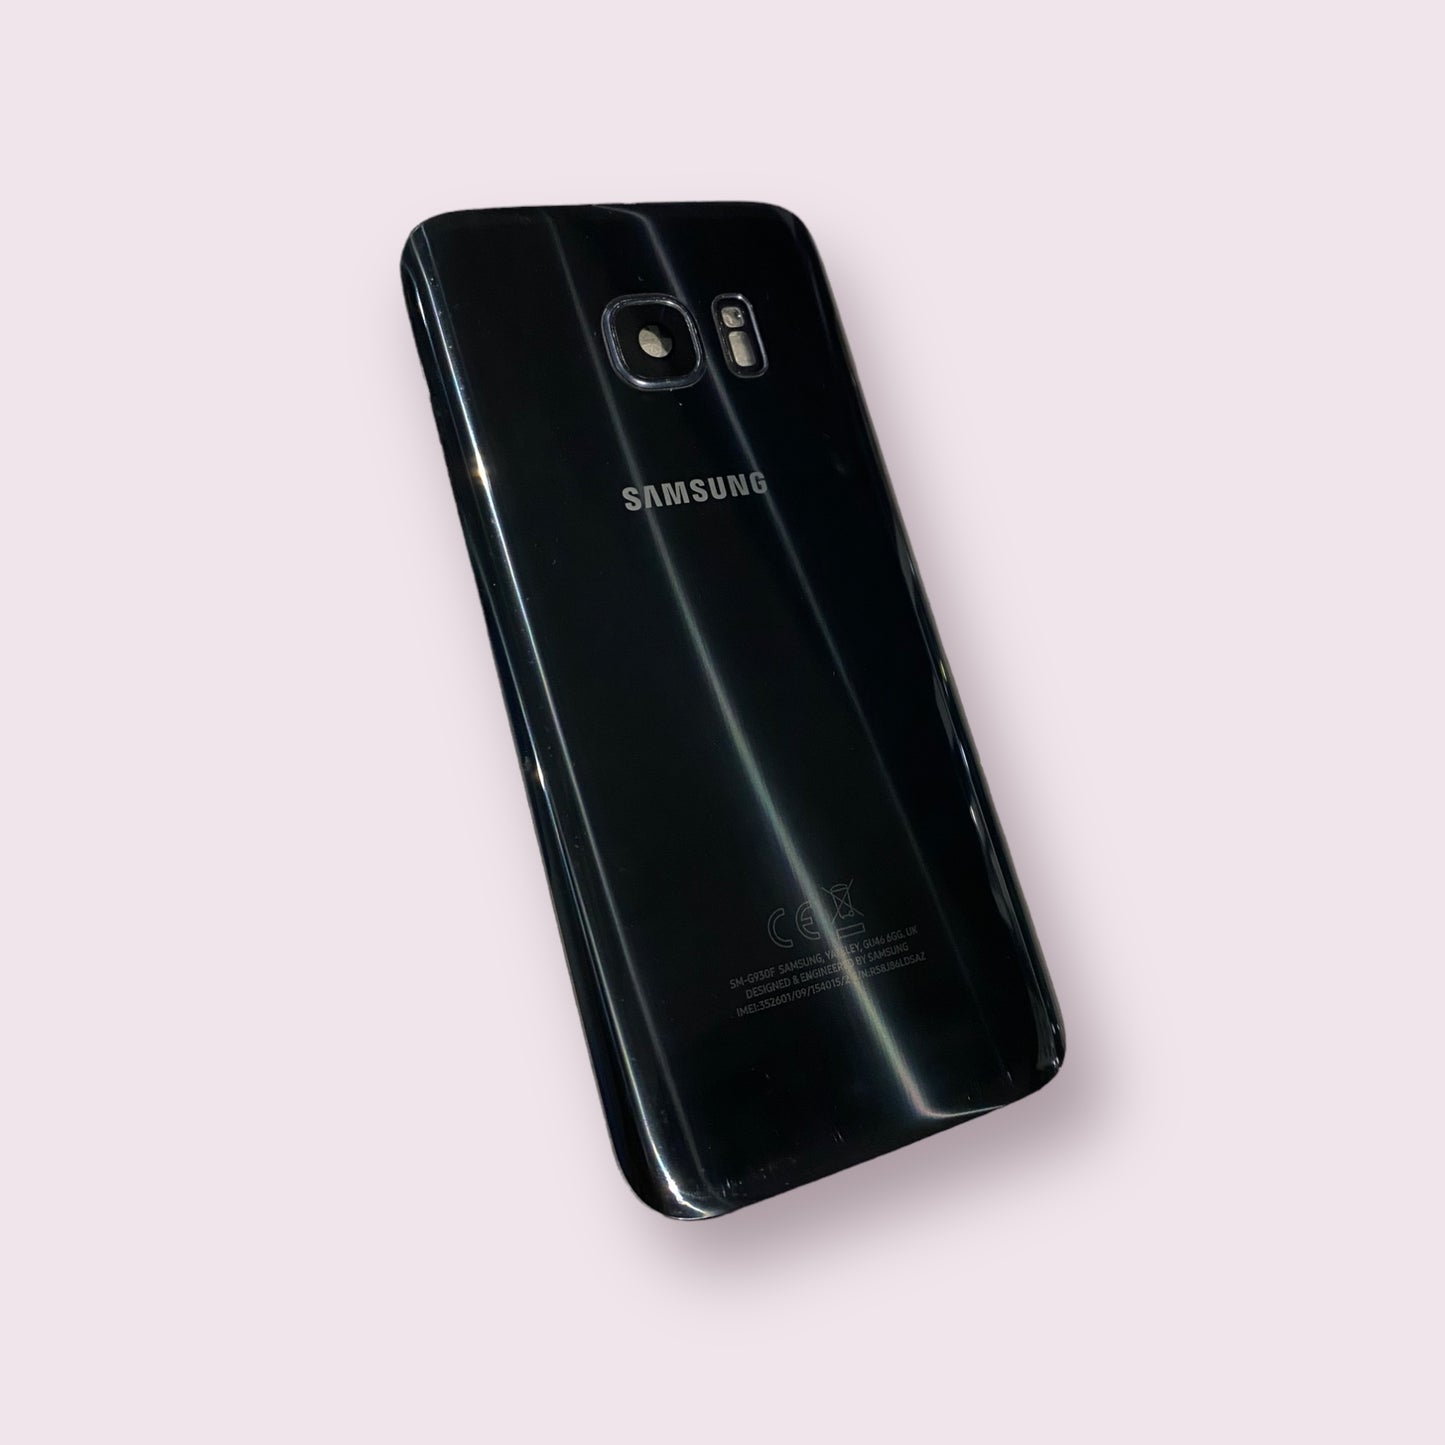 Samsung Galaxy S7 SM-G930F Black back Glass - Genuine Pull Part - Grade B